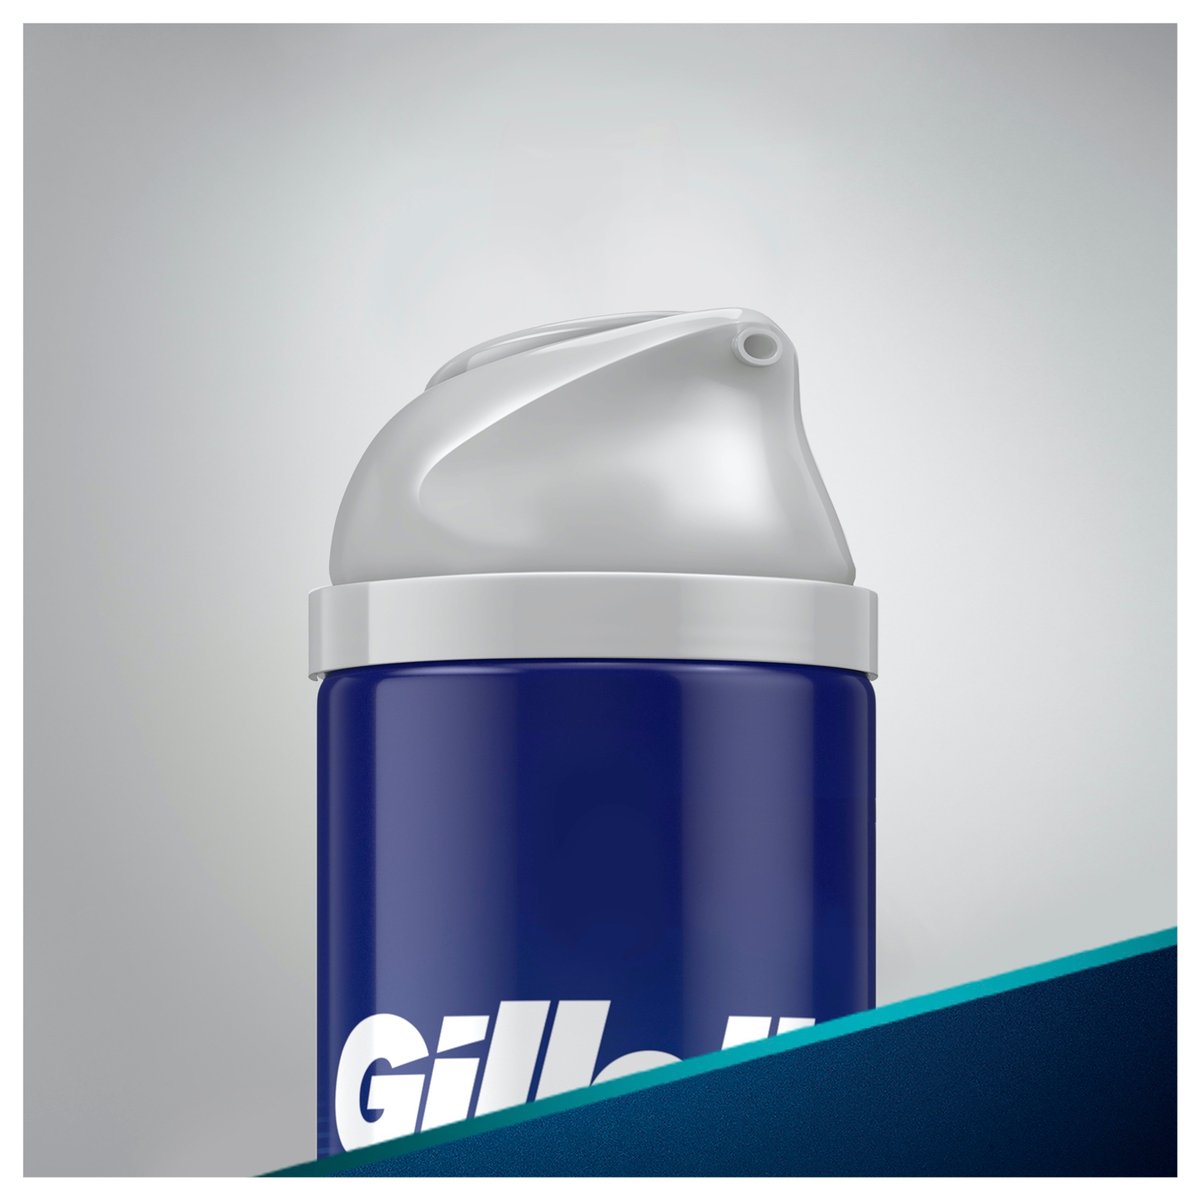 Gillette Series Sensitive Shaving Gel With Aloe 2 x 200 ml